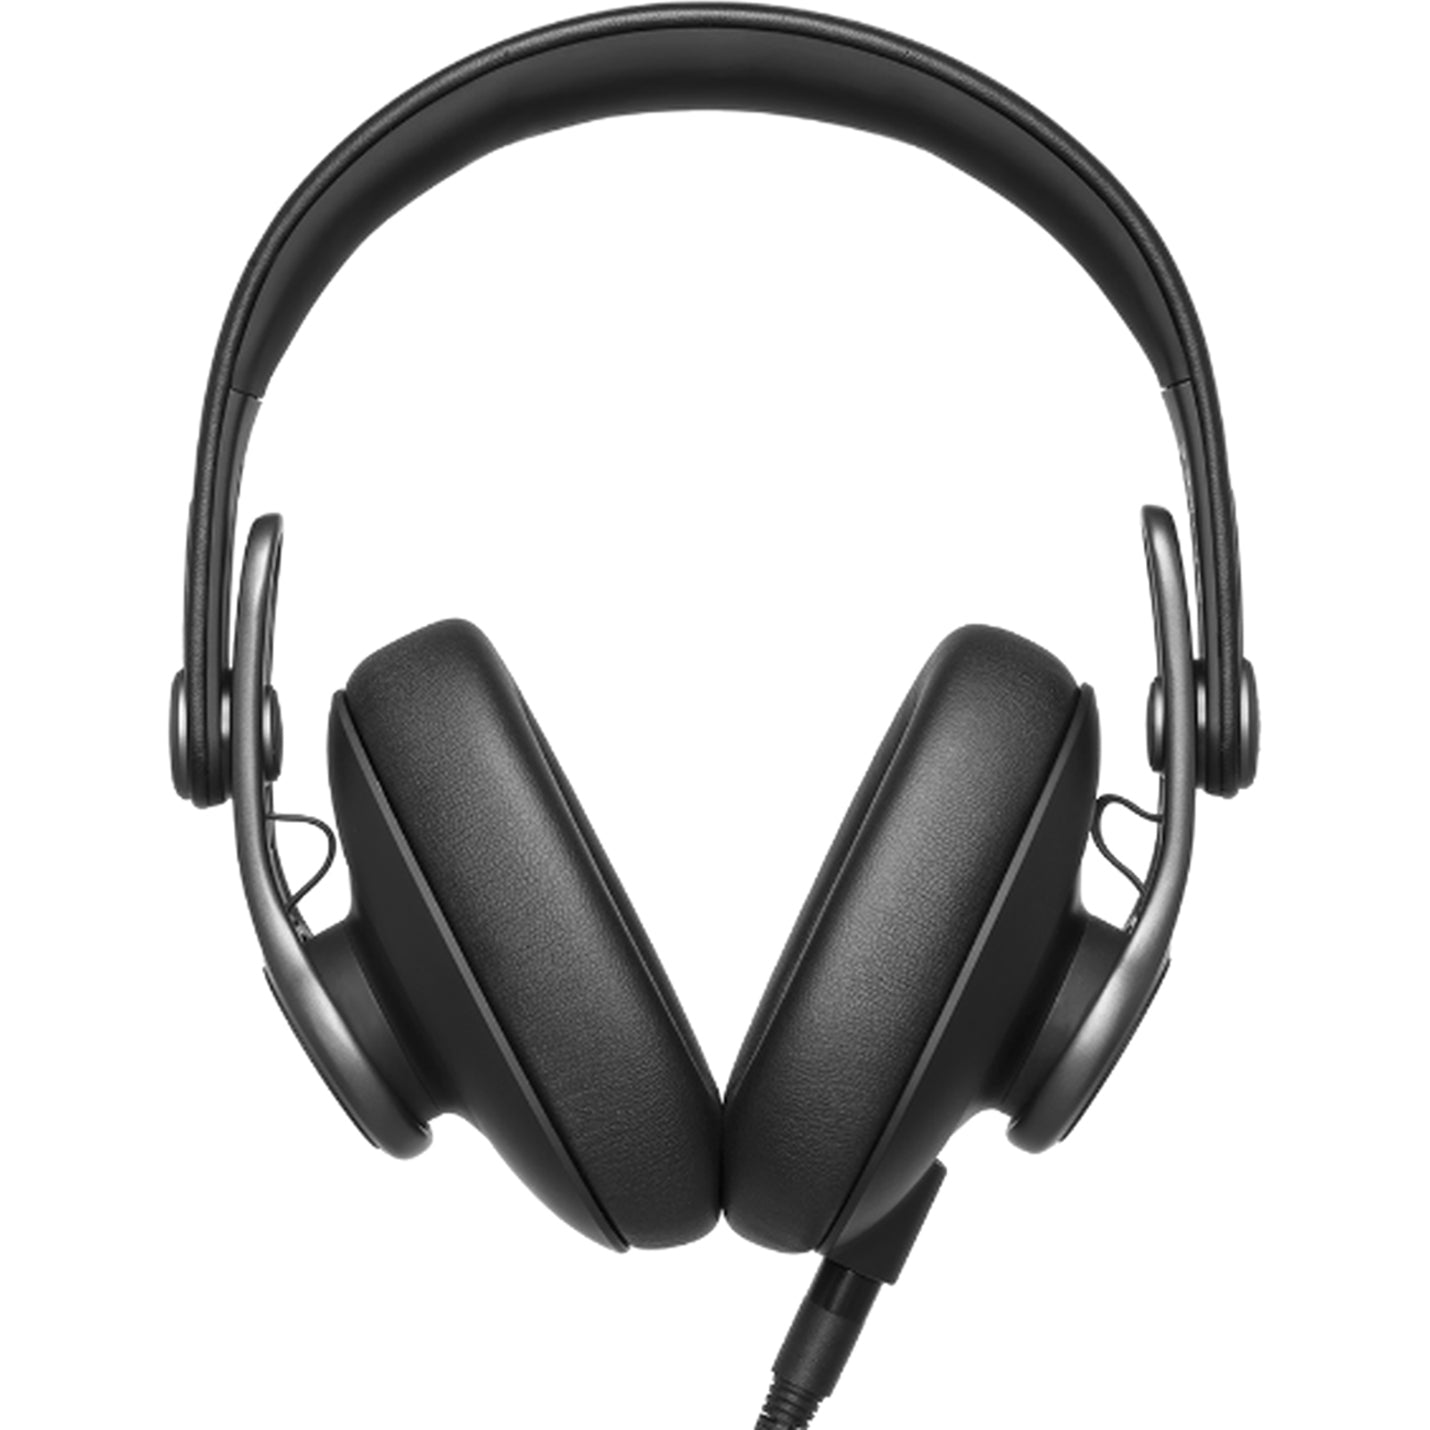 AKG K371-BT Over-Ear Foldable Studio Headphones With Bluetooth, Closed-Back, Gunmetal Black